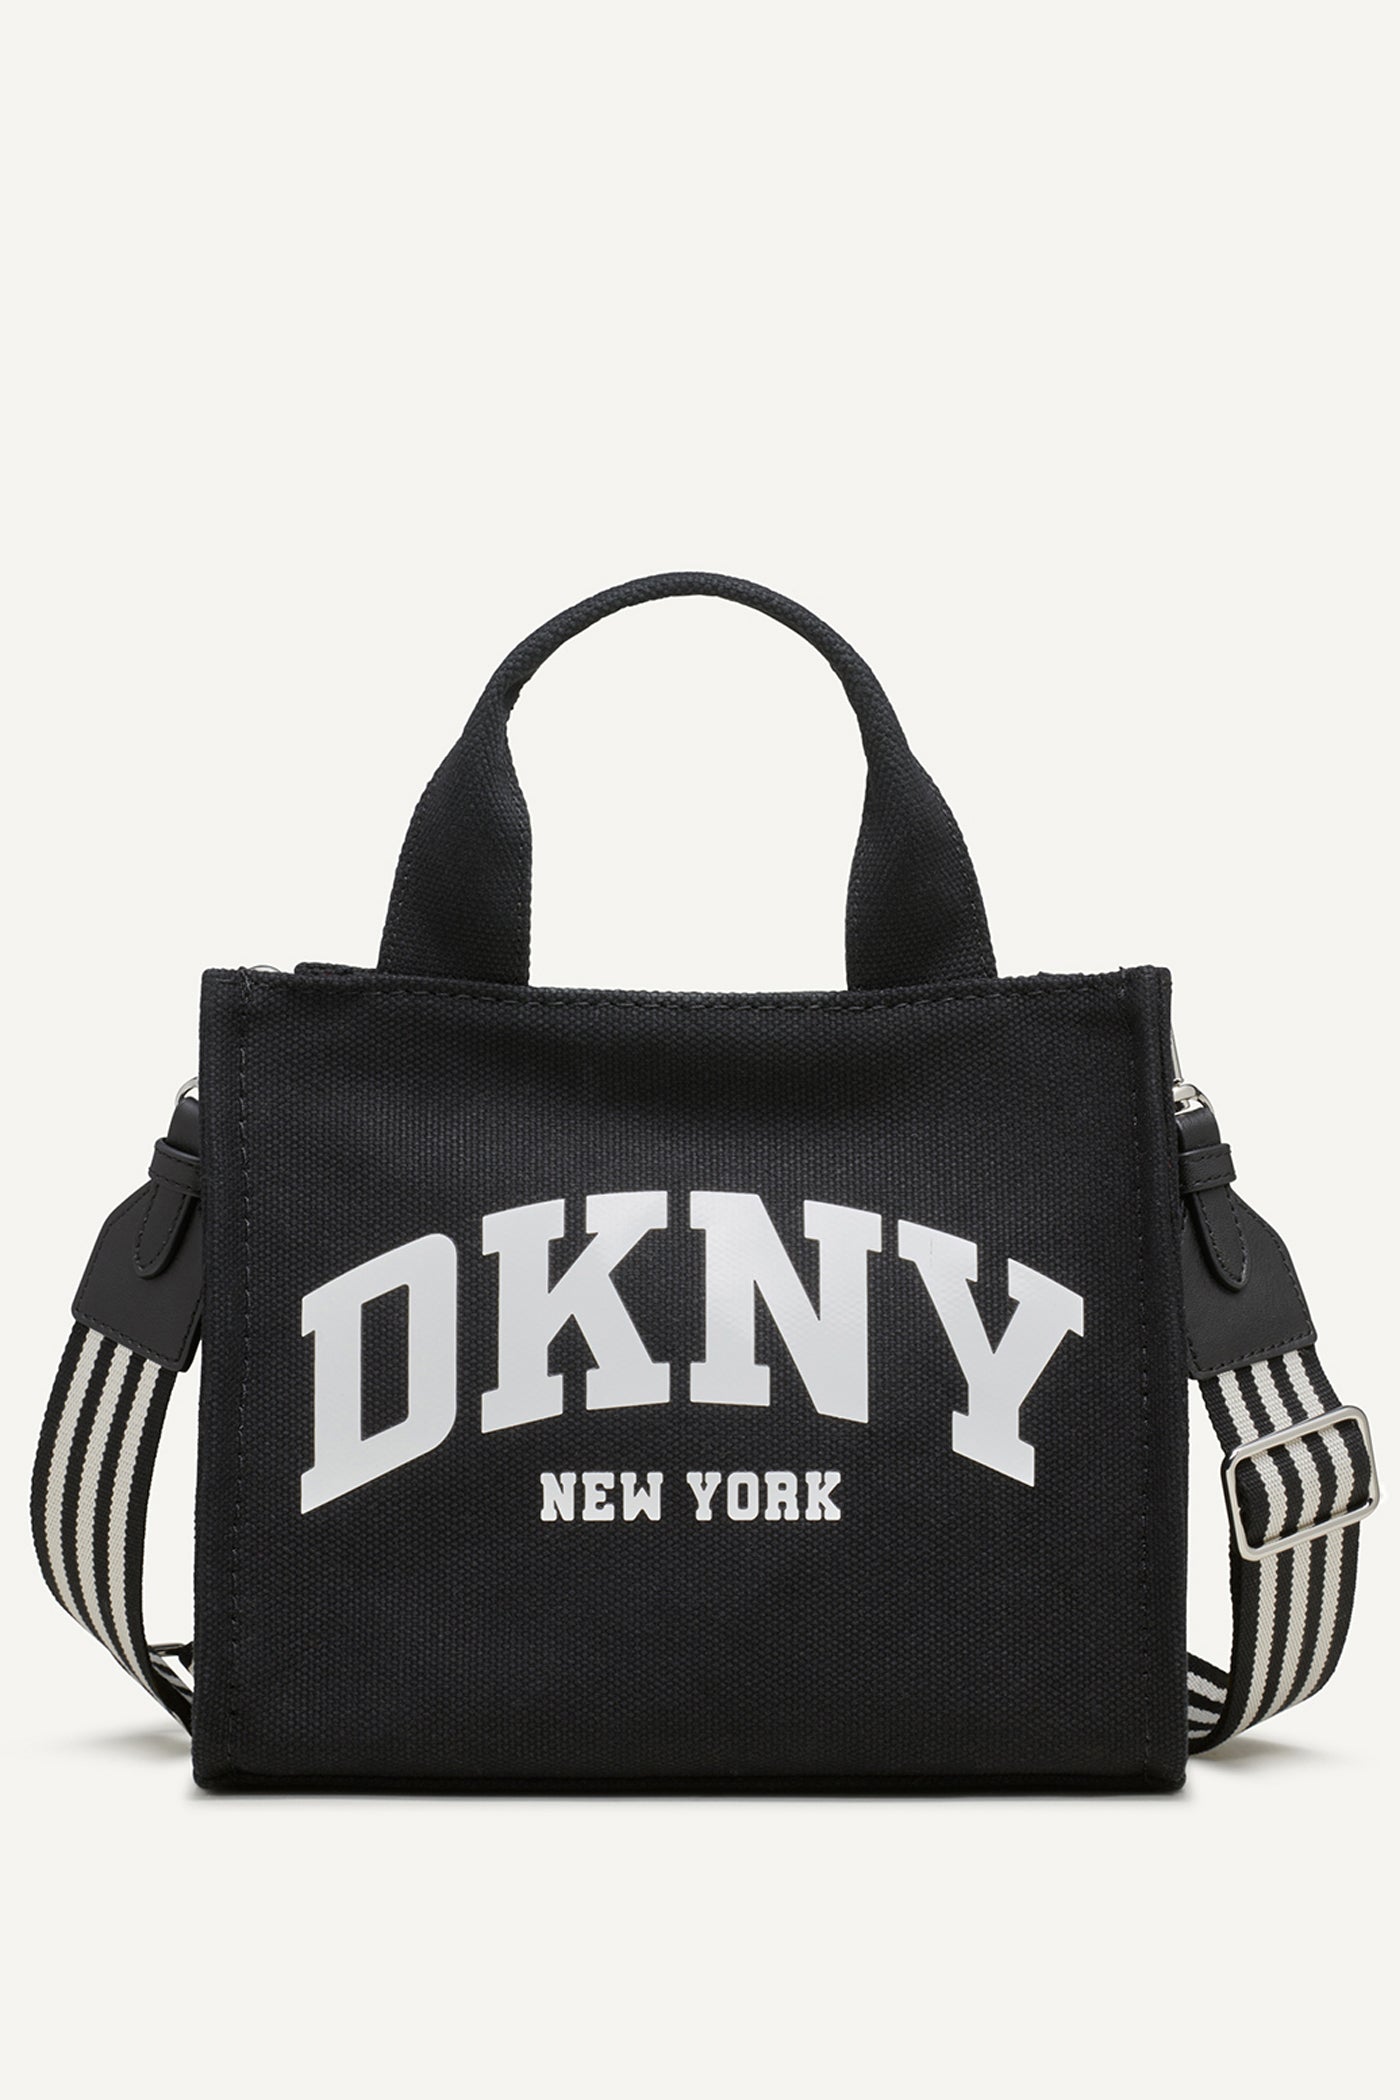 vintage dkny travel bag